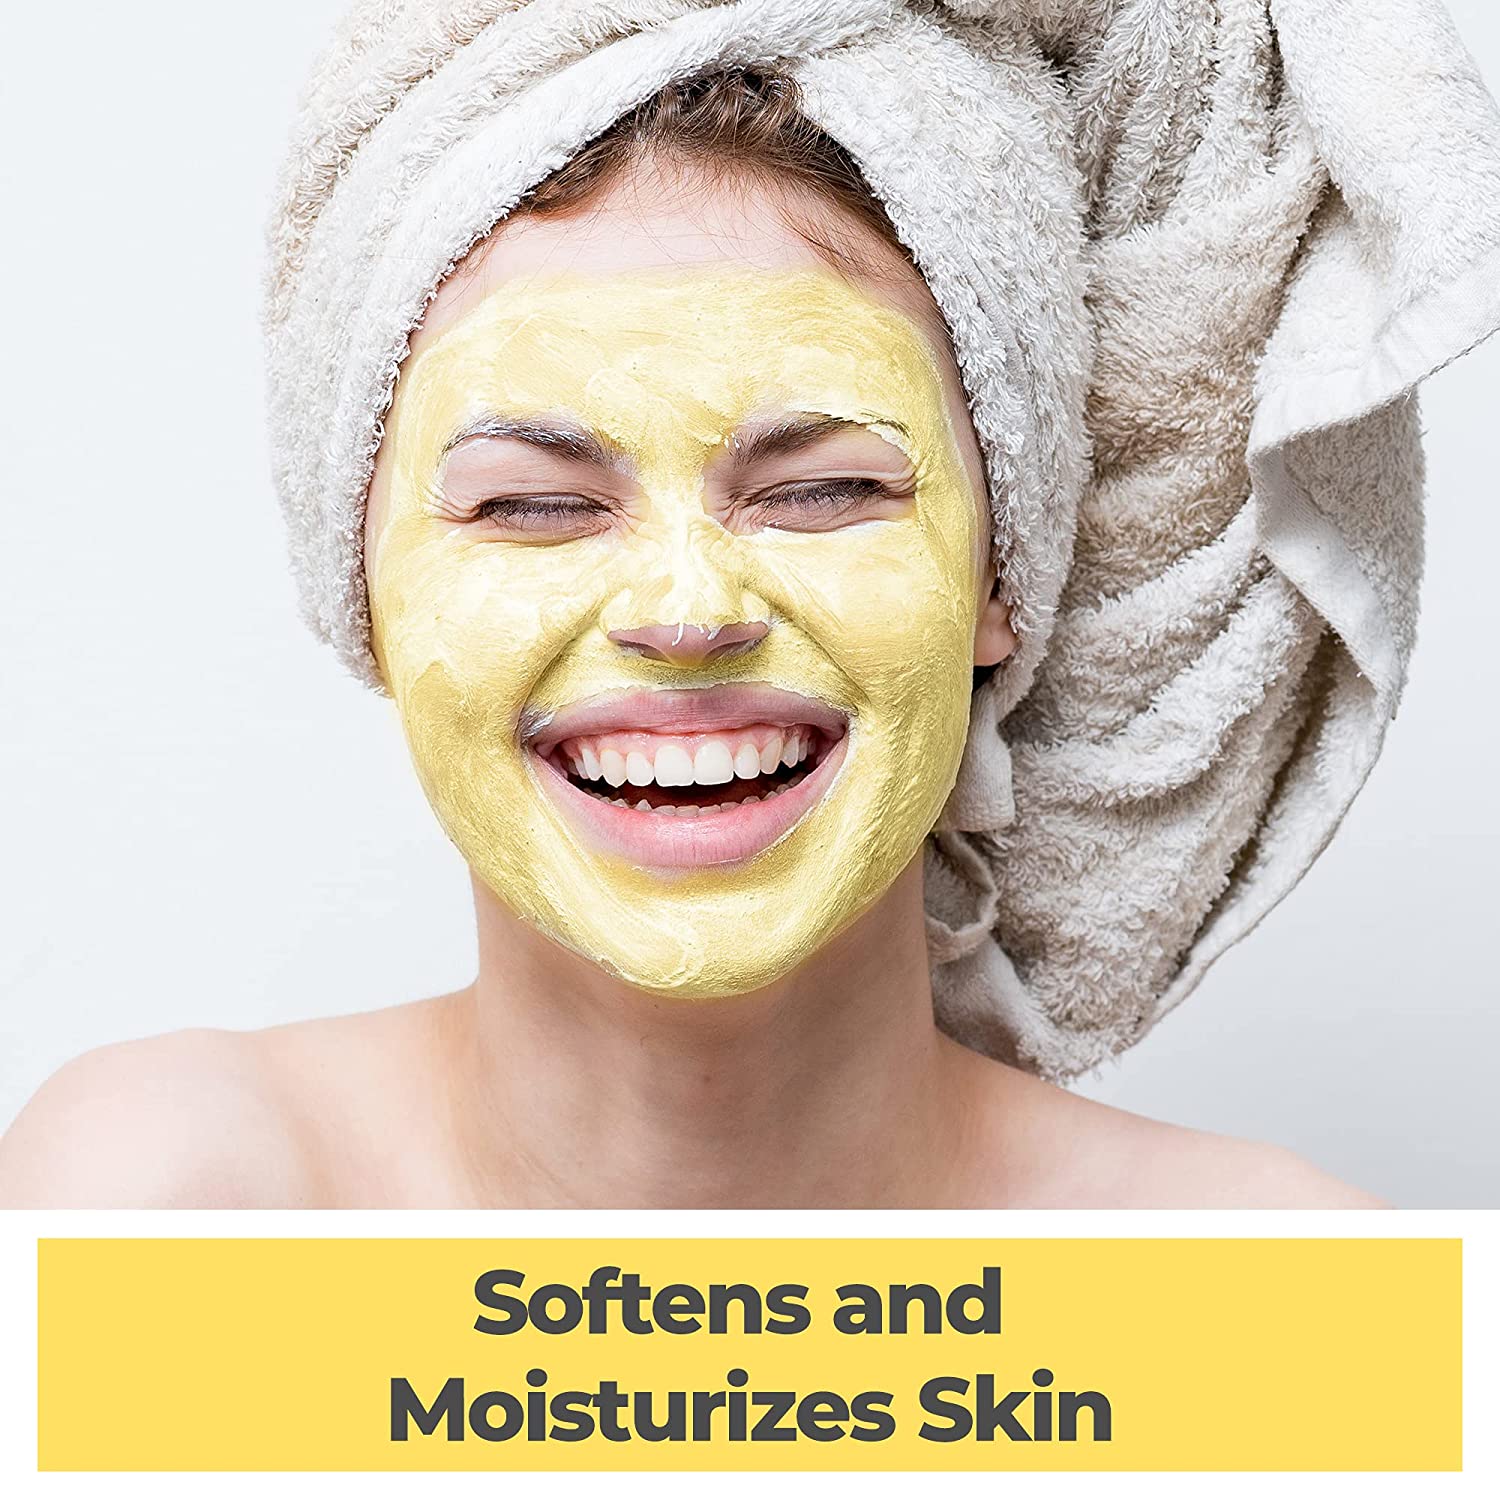 Vivo Per Lei Honeybee Mud Moisturizing Organic Detox Honey Facial Mask